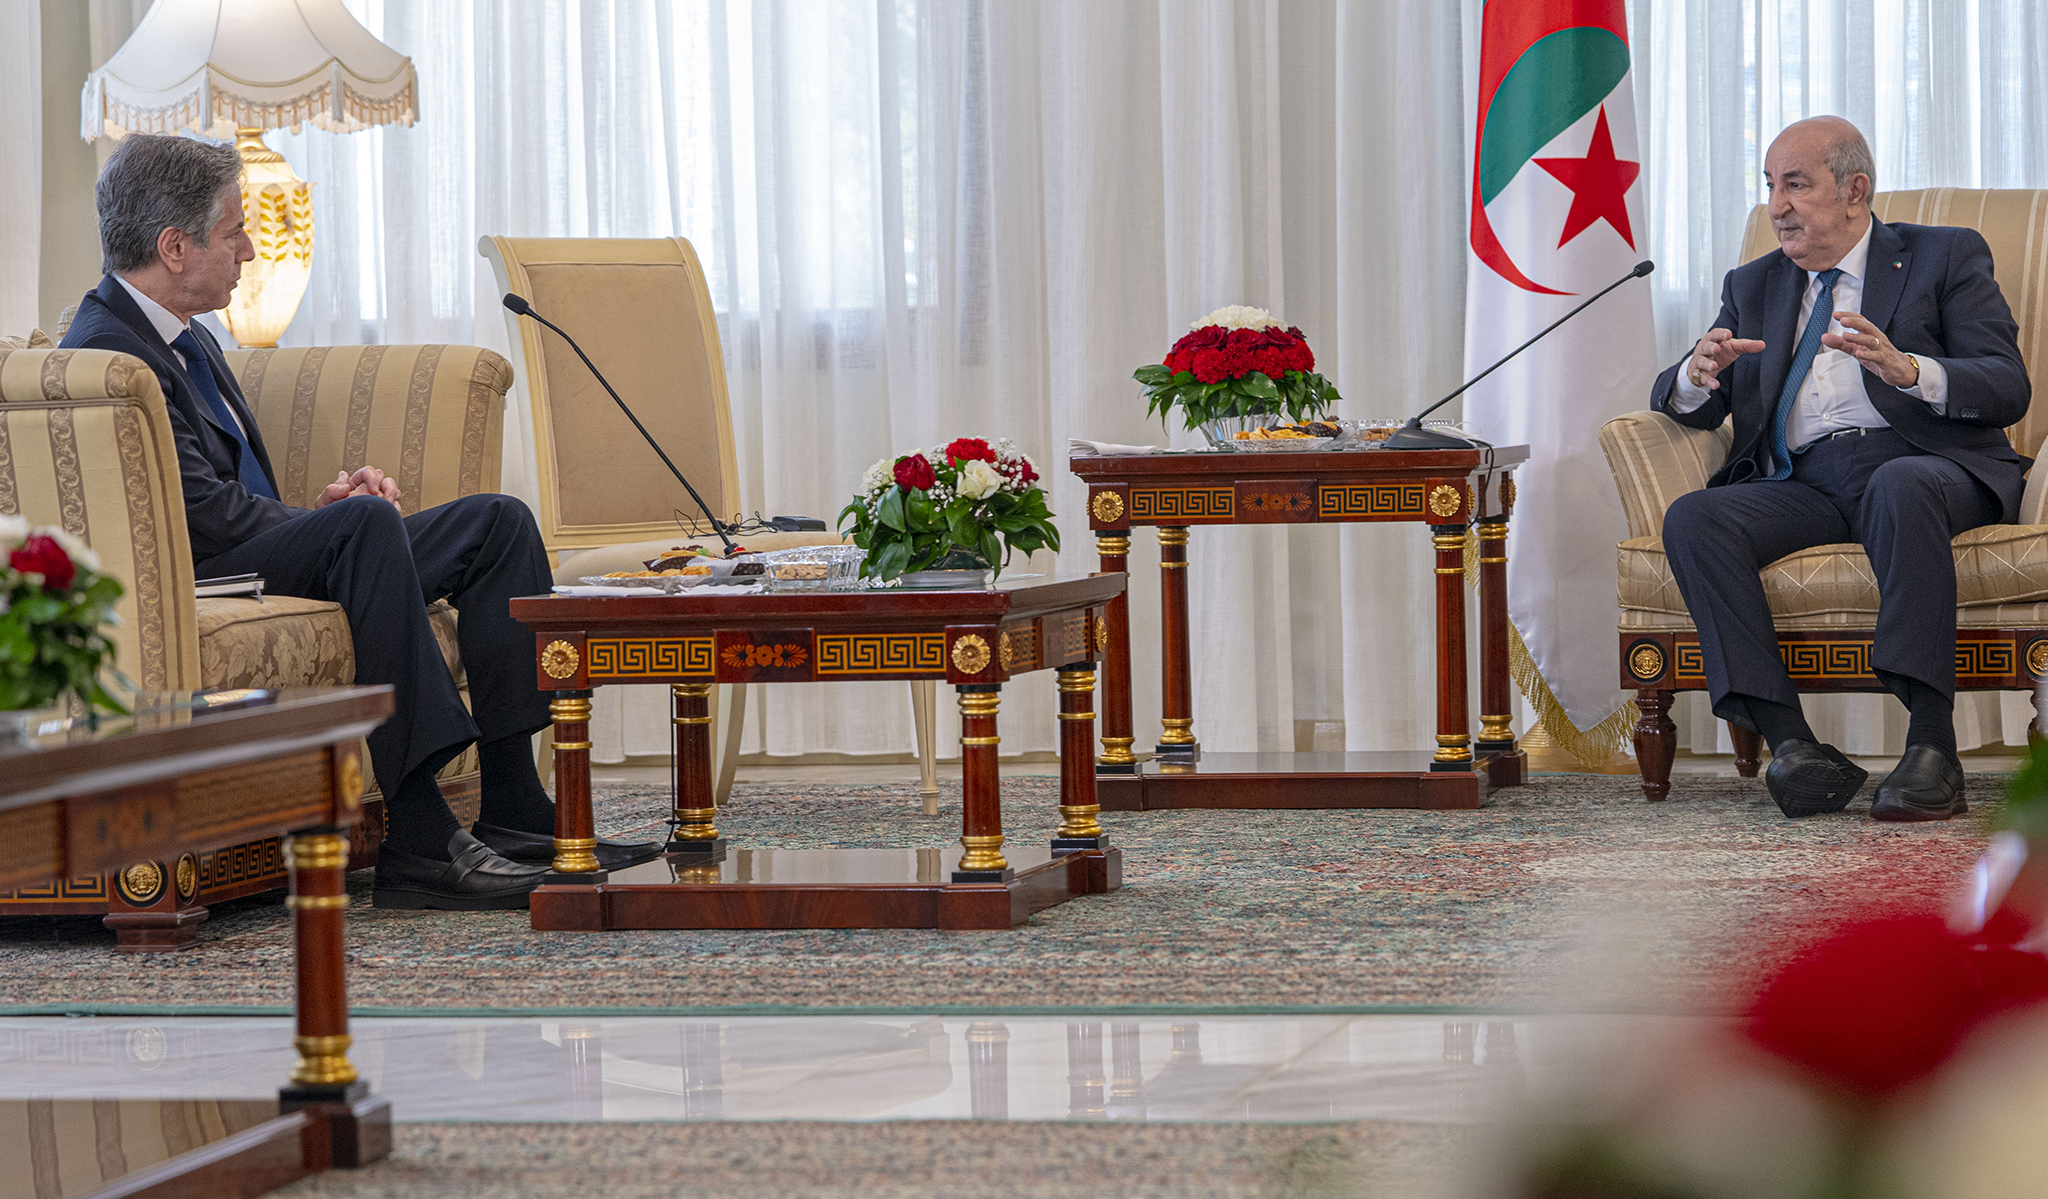 Secretary of State Antony J. Blinken meets with Algerian President Abdelmadjid Tebboune in Algiers, Algeria, on March 30, 2022. (Freddie Everett/U.S. State Department)